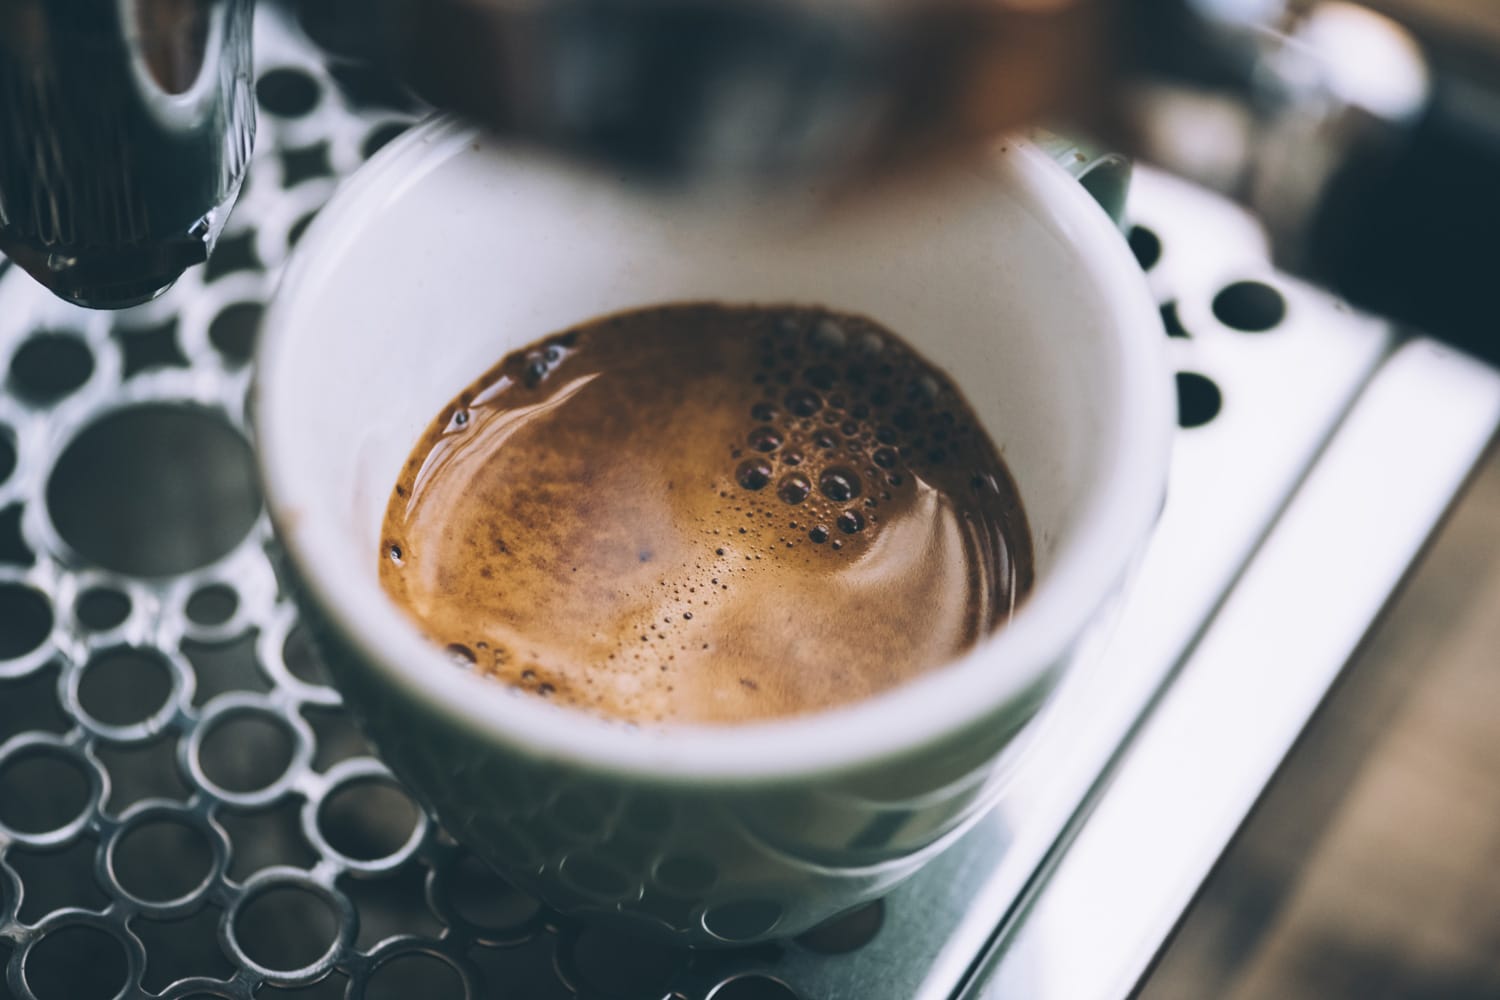 Delicious morning fresh espresso coffee with a thick crema